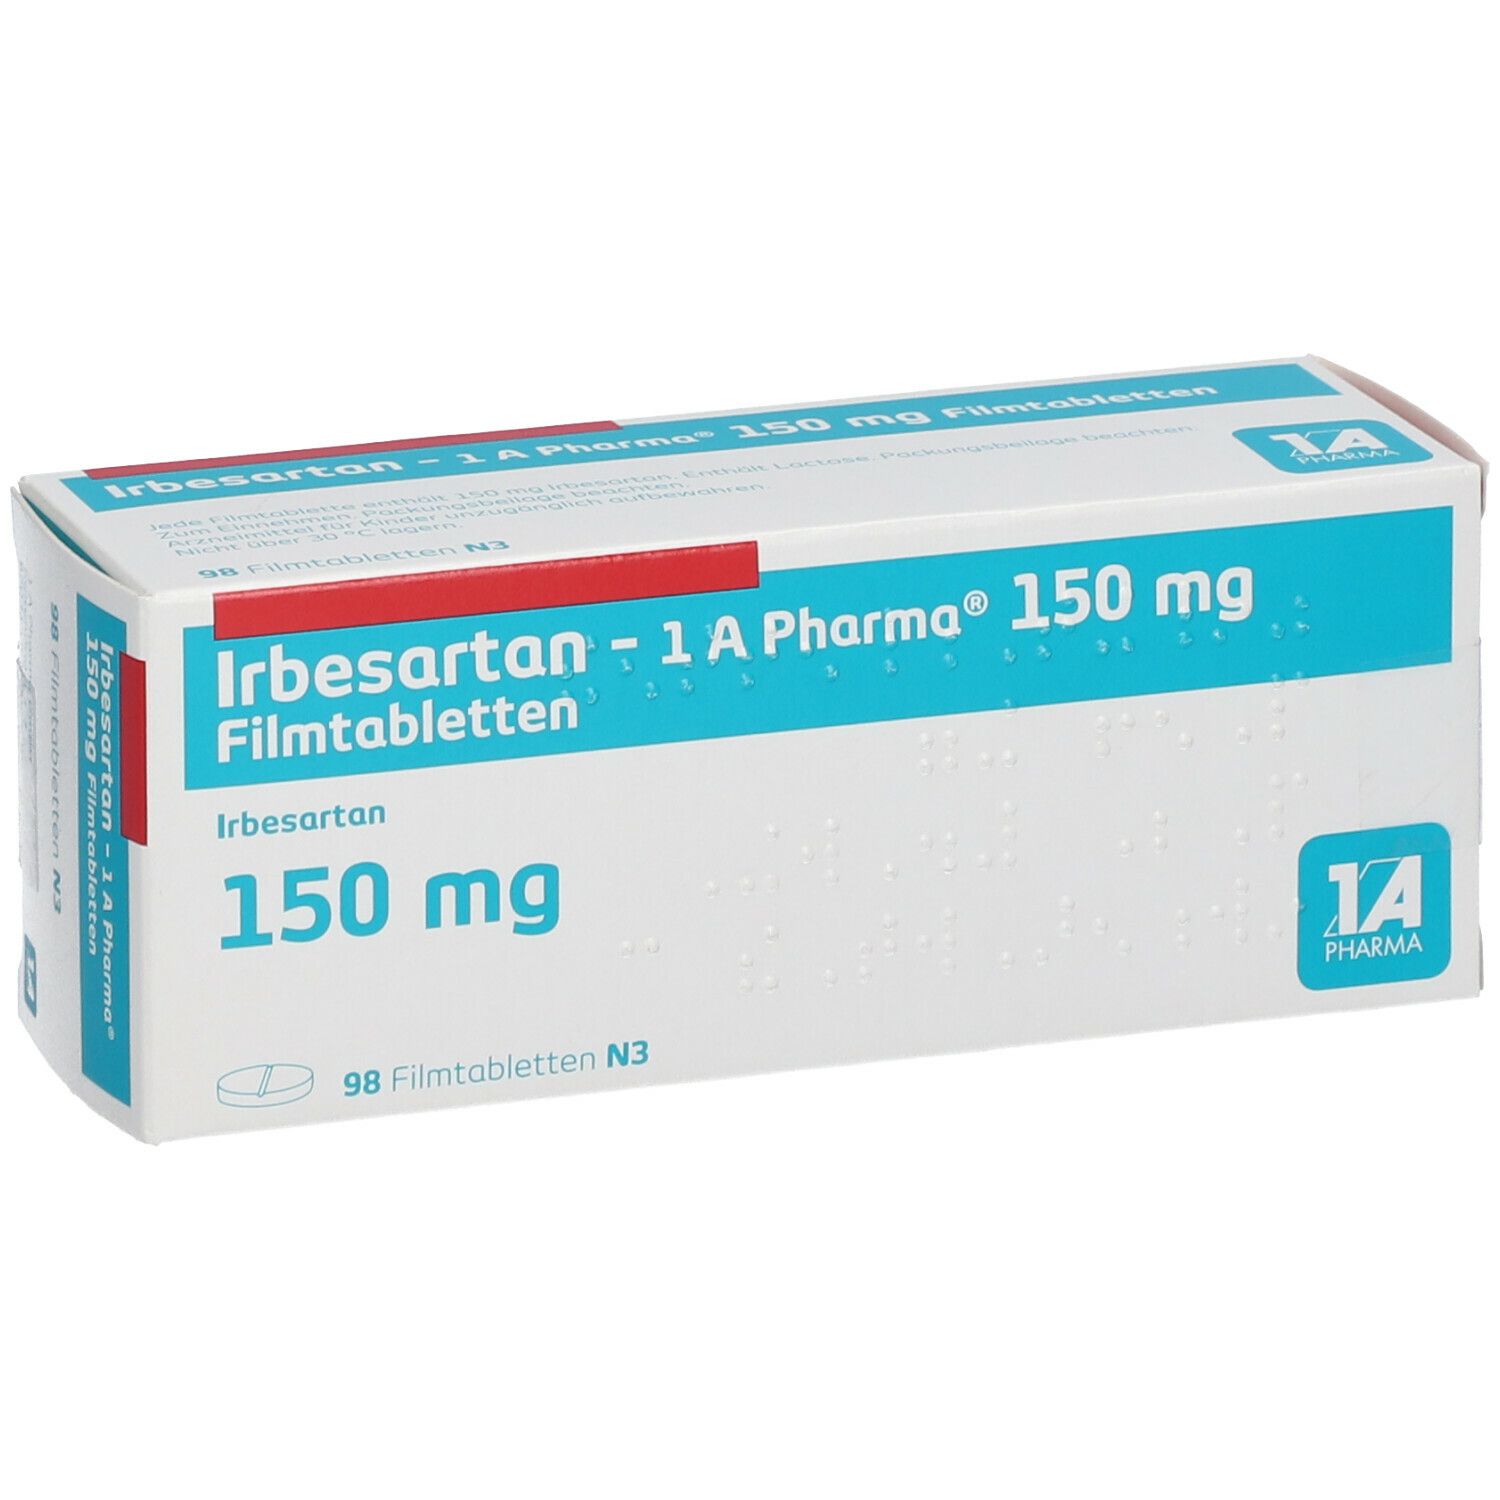 Irbesartan 1A Pharma® 150Mg